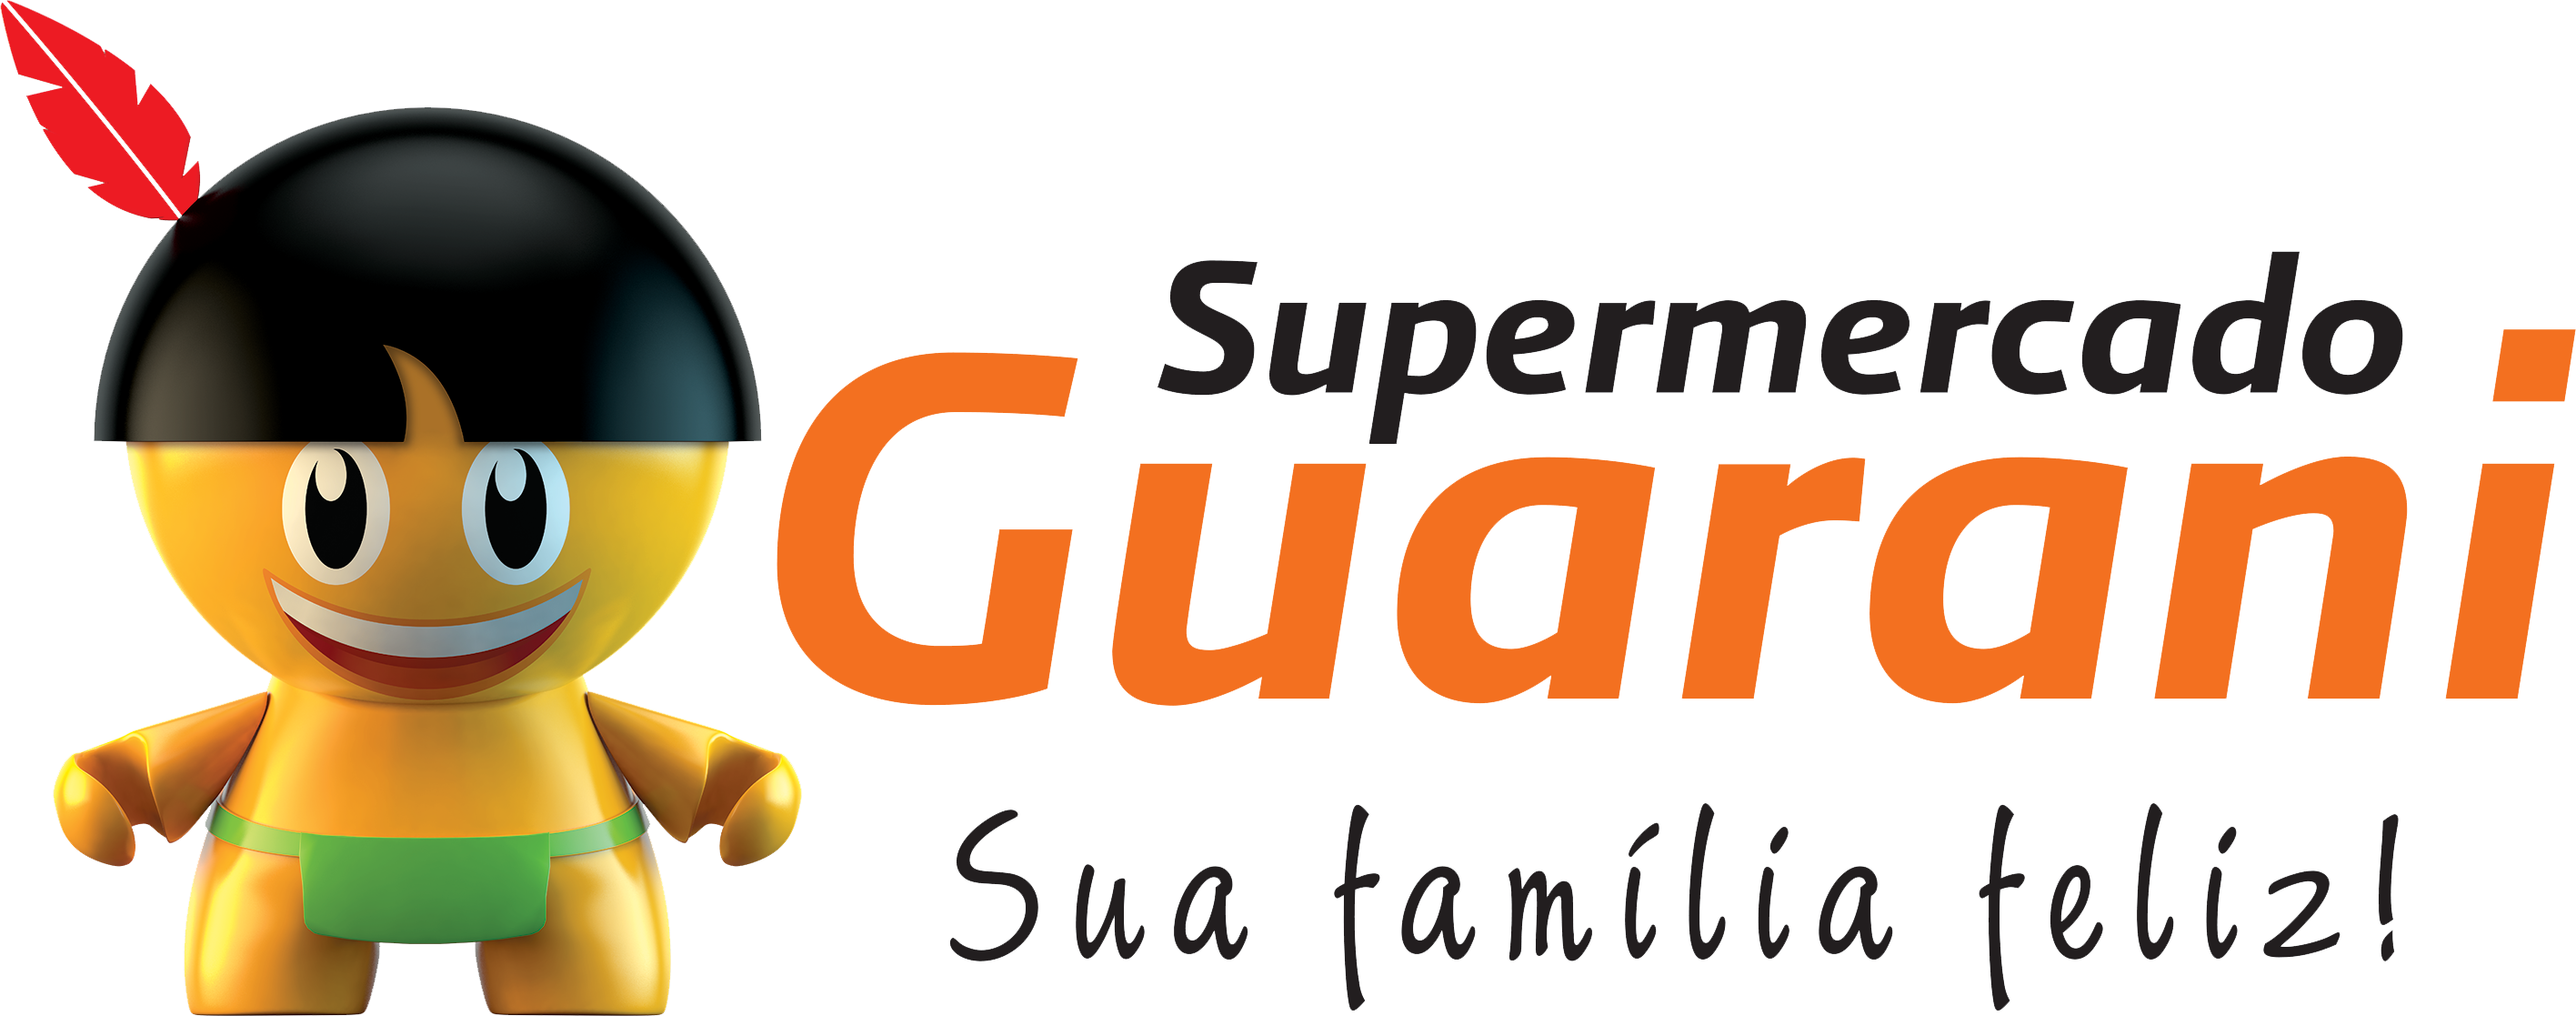 Supermercado Guarani – Sua família feliz!